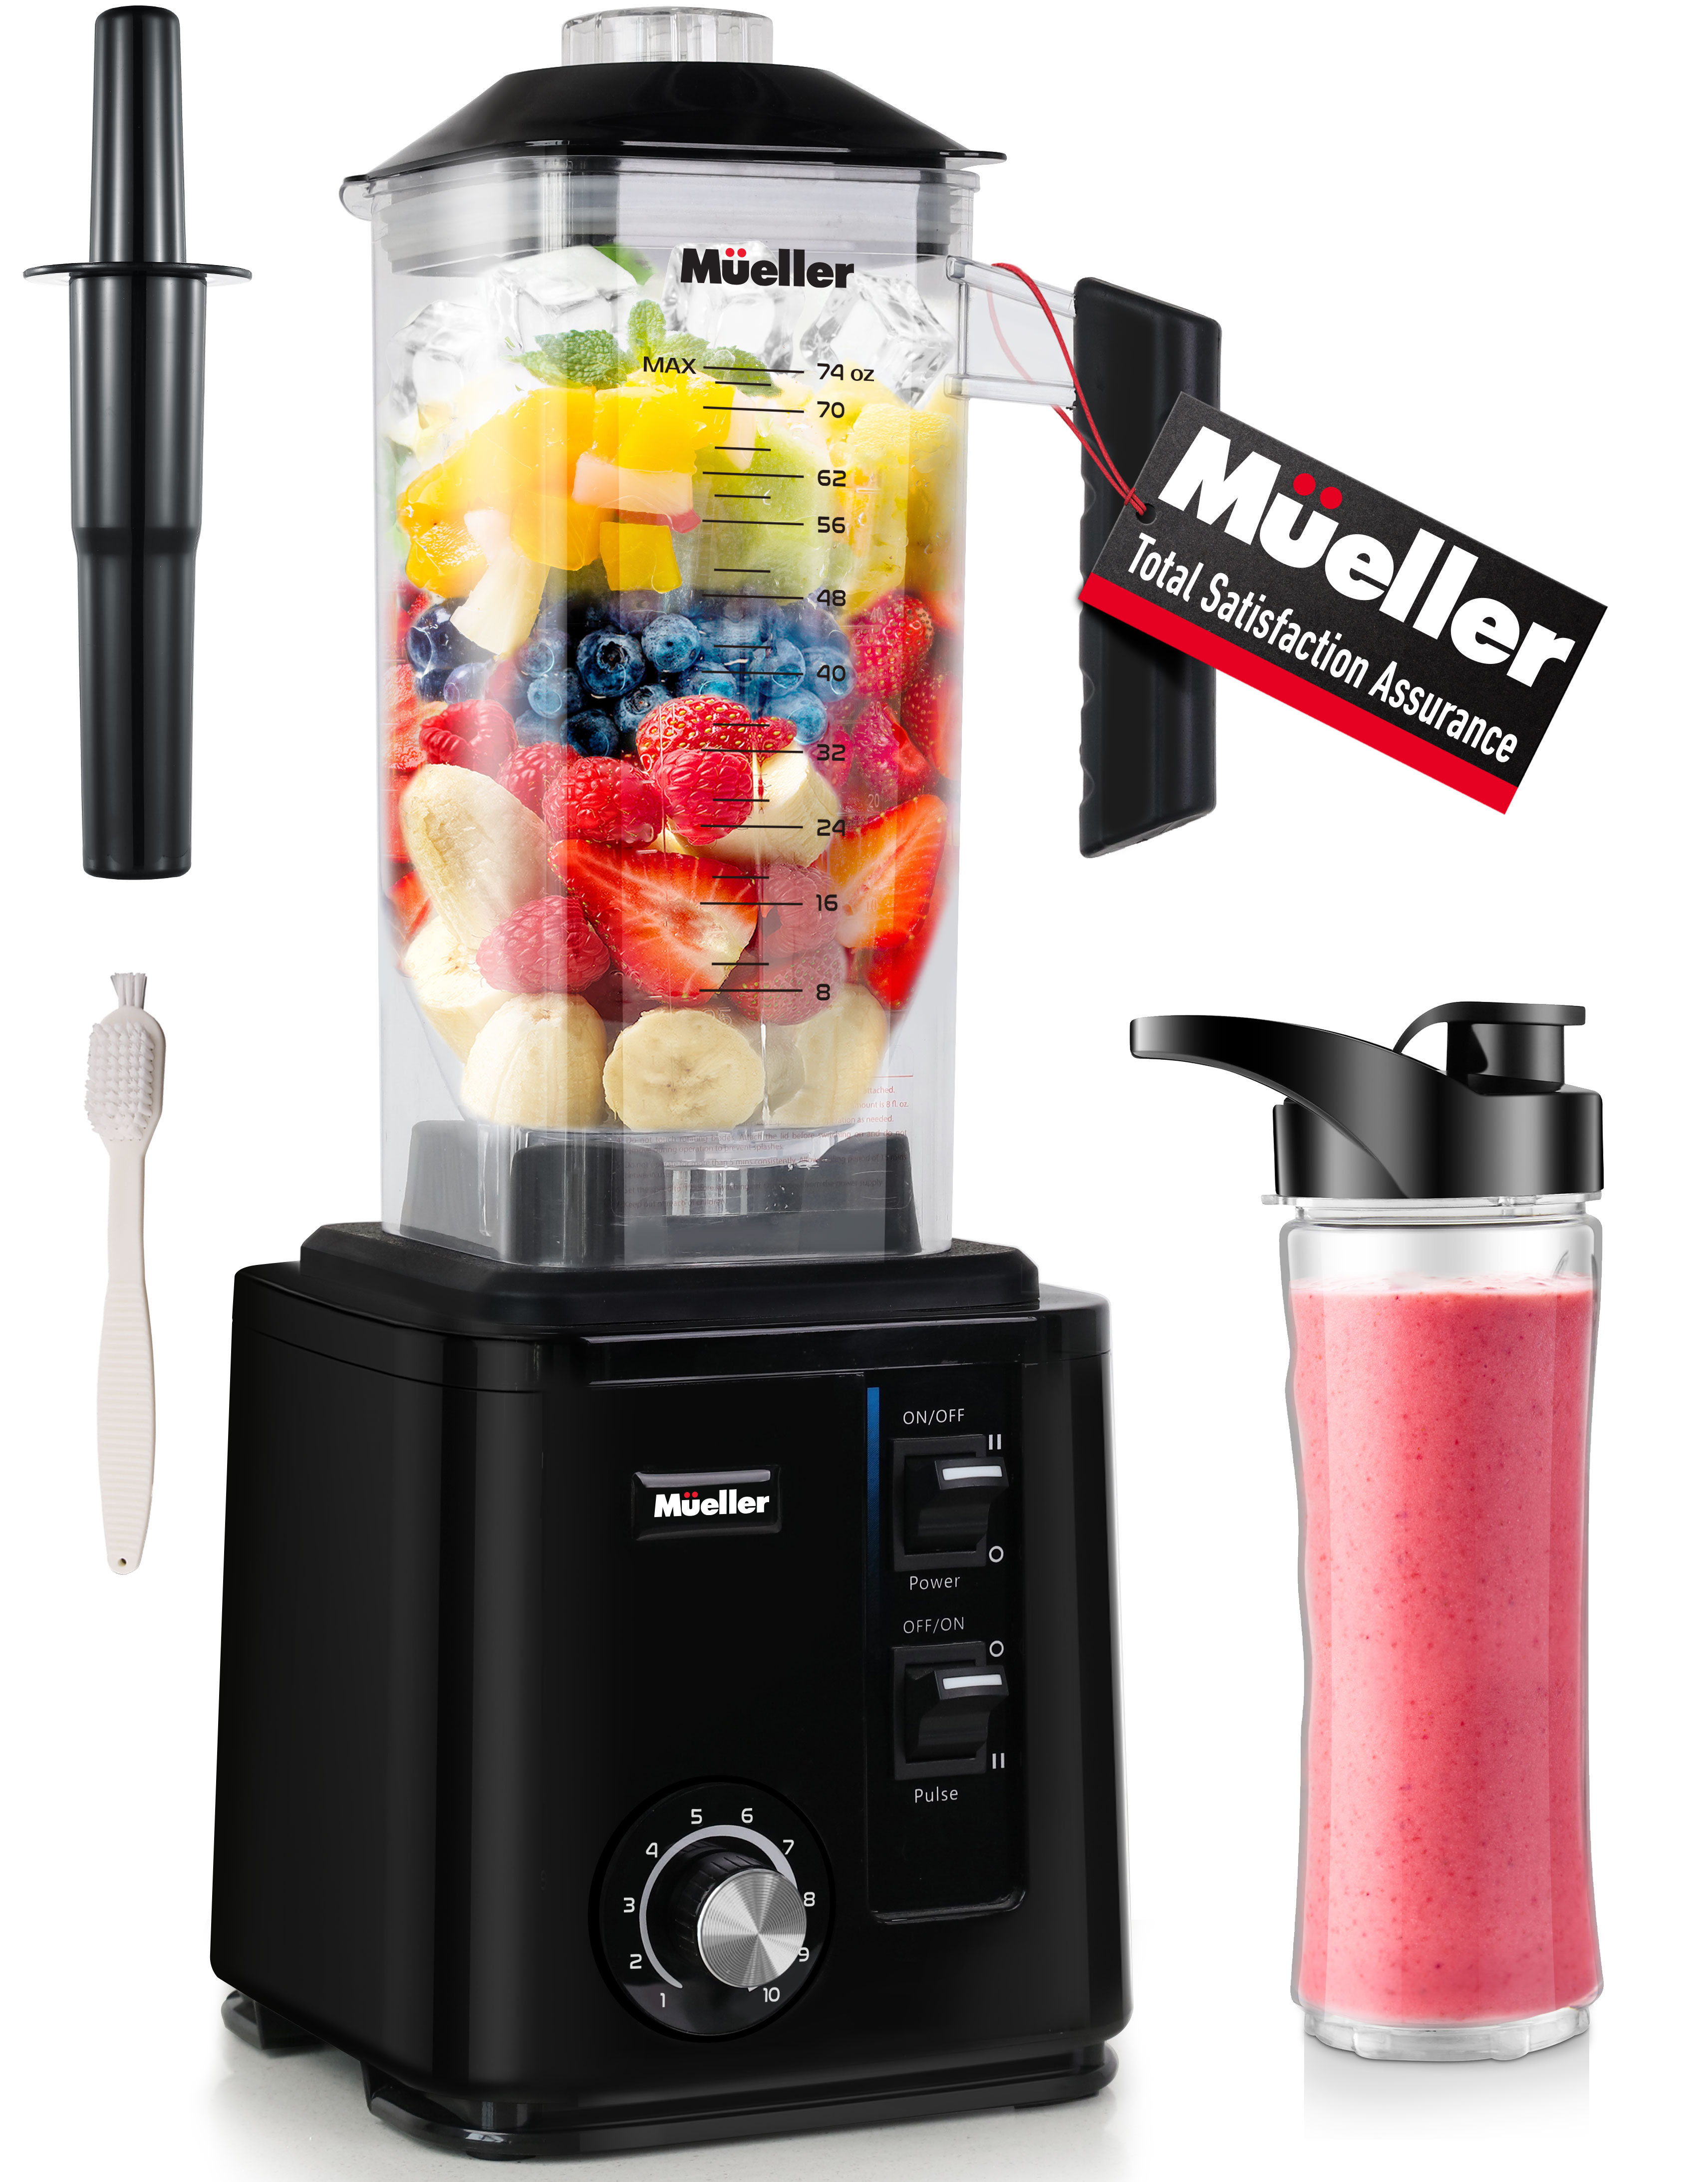 Mueller Home Blender & Reviews